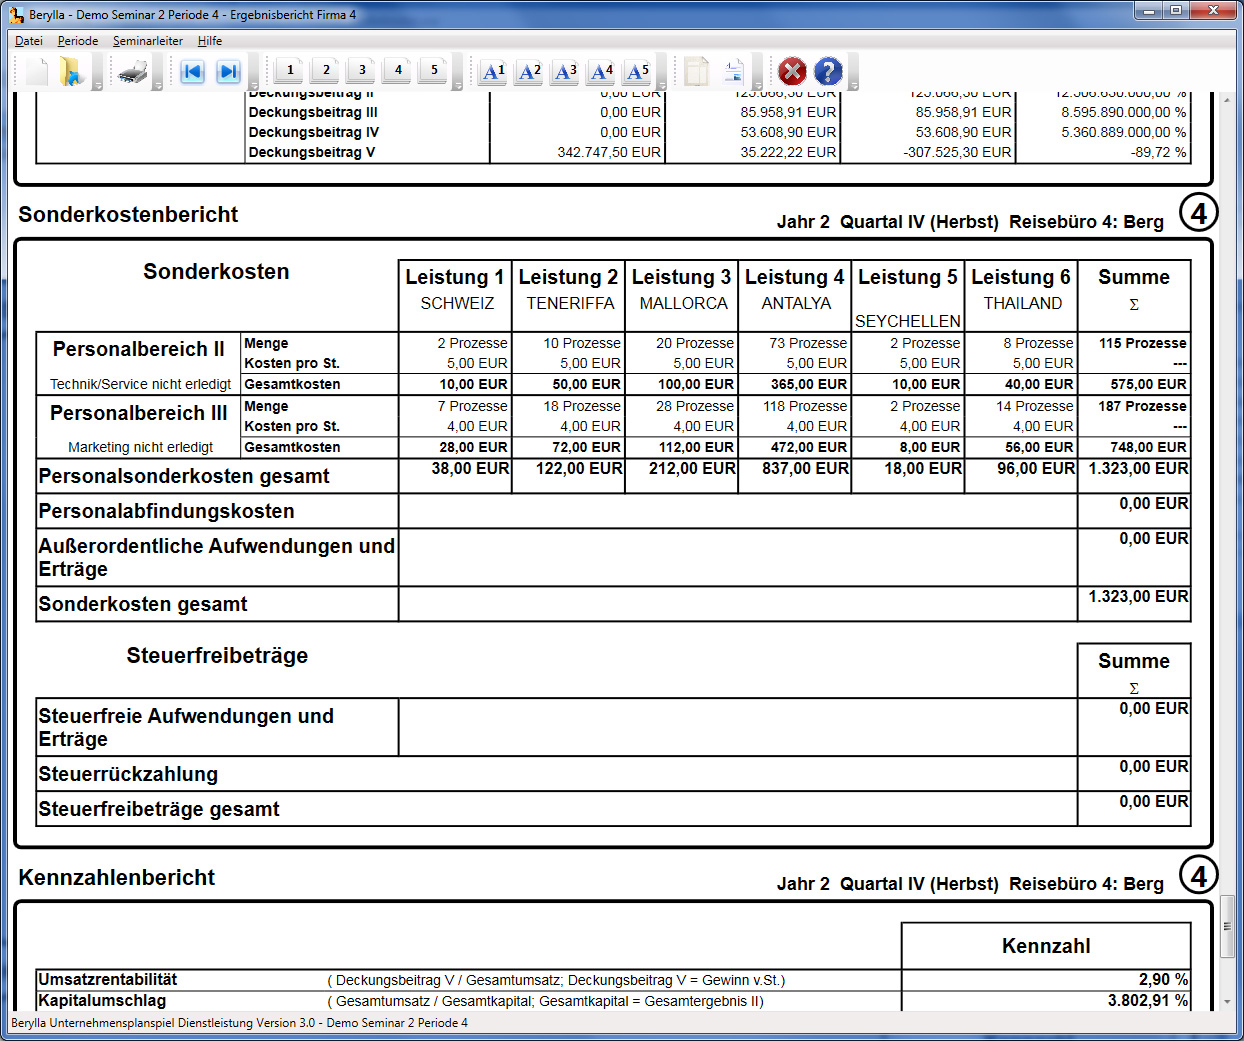 Screenshot Berylla - Sonderkostenbericht